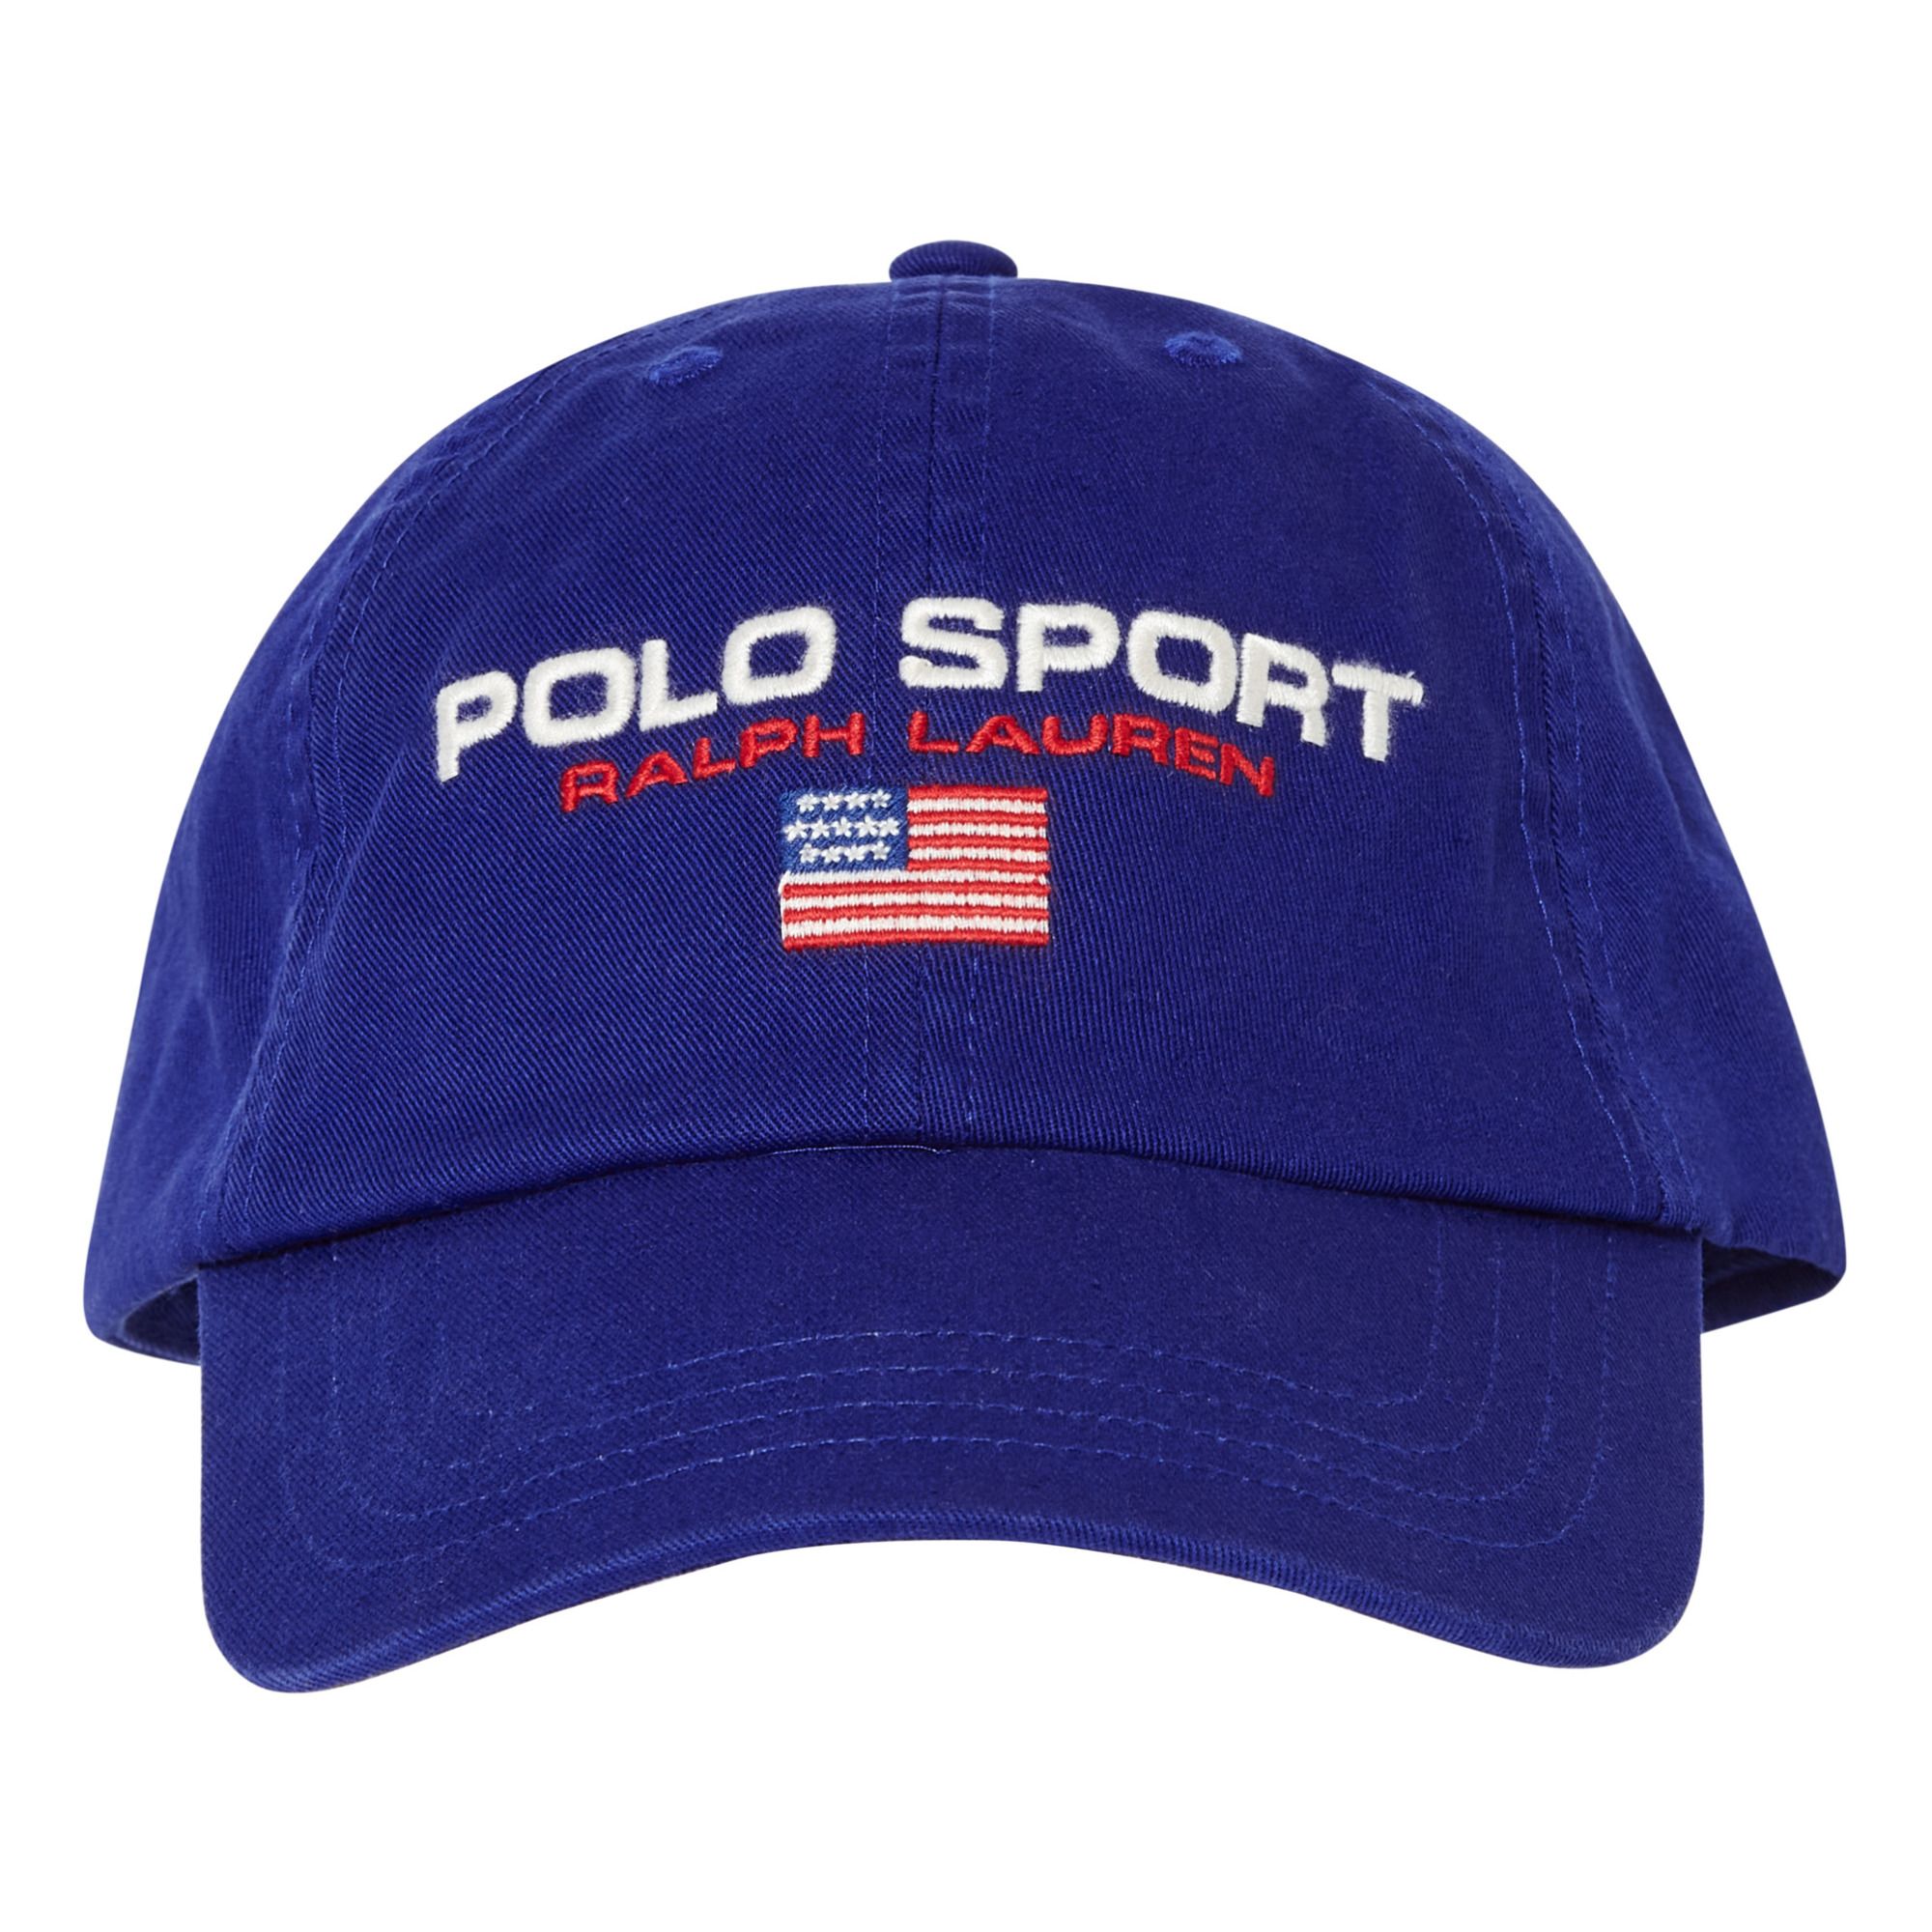 Ralph Lauren - Polo Sport Cap - Blue | Smallable